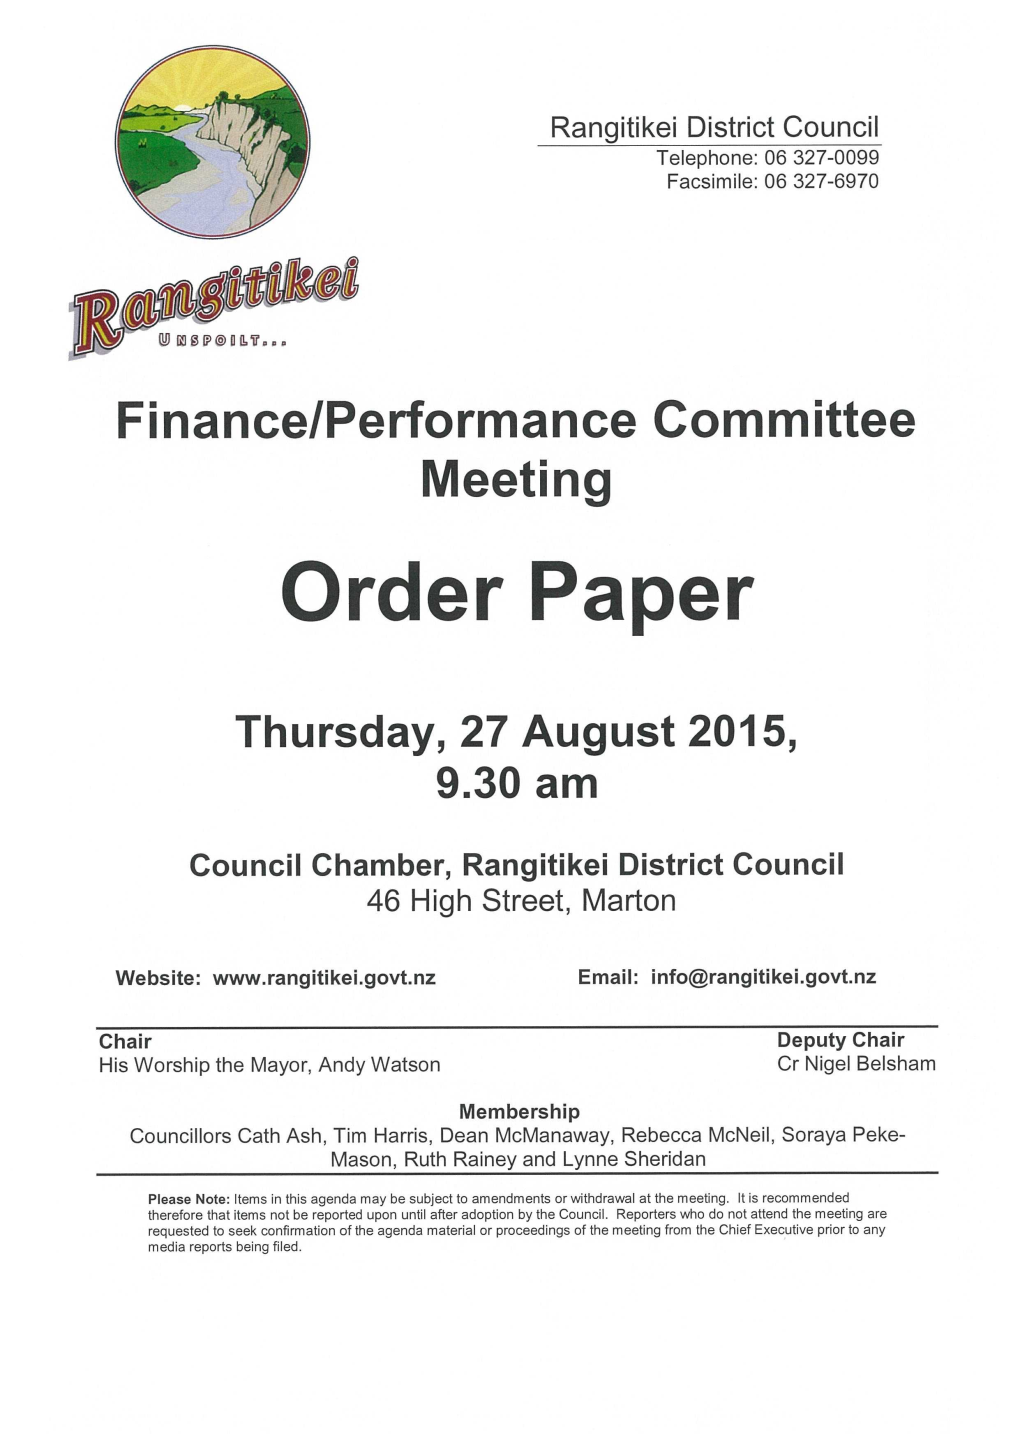 Finance/Performance Committee Meeting Order Paper